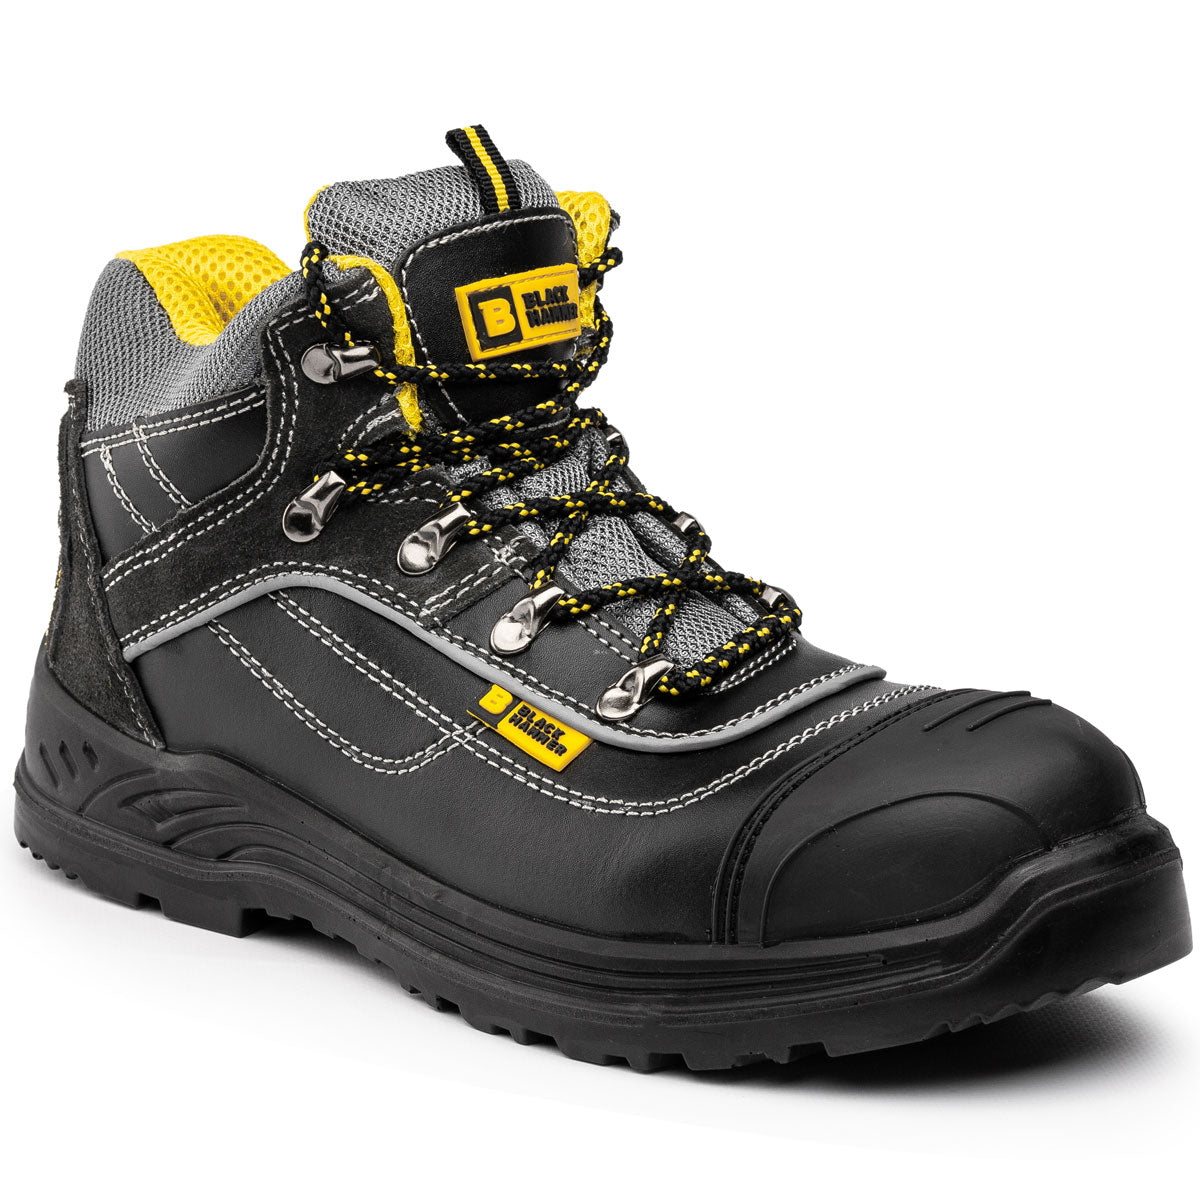 Black Hammer Mens Safety Boots Work Waterproof Shoes Leather Steel Toe Cap Working Ankle Lightweight Footwear S3 SRC 9944 - Black Hammer